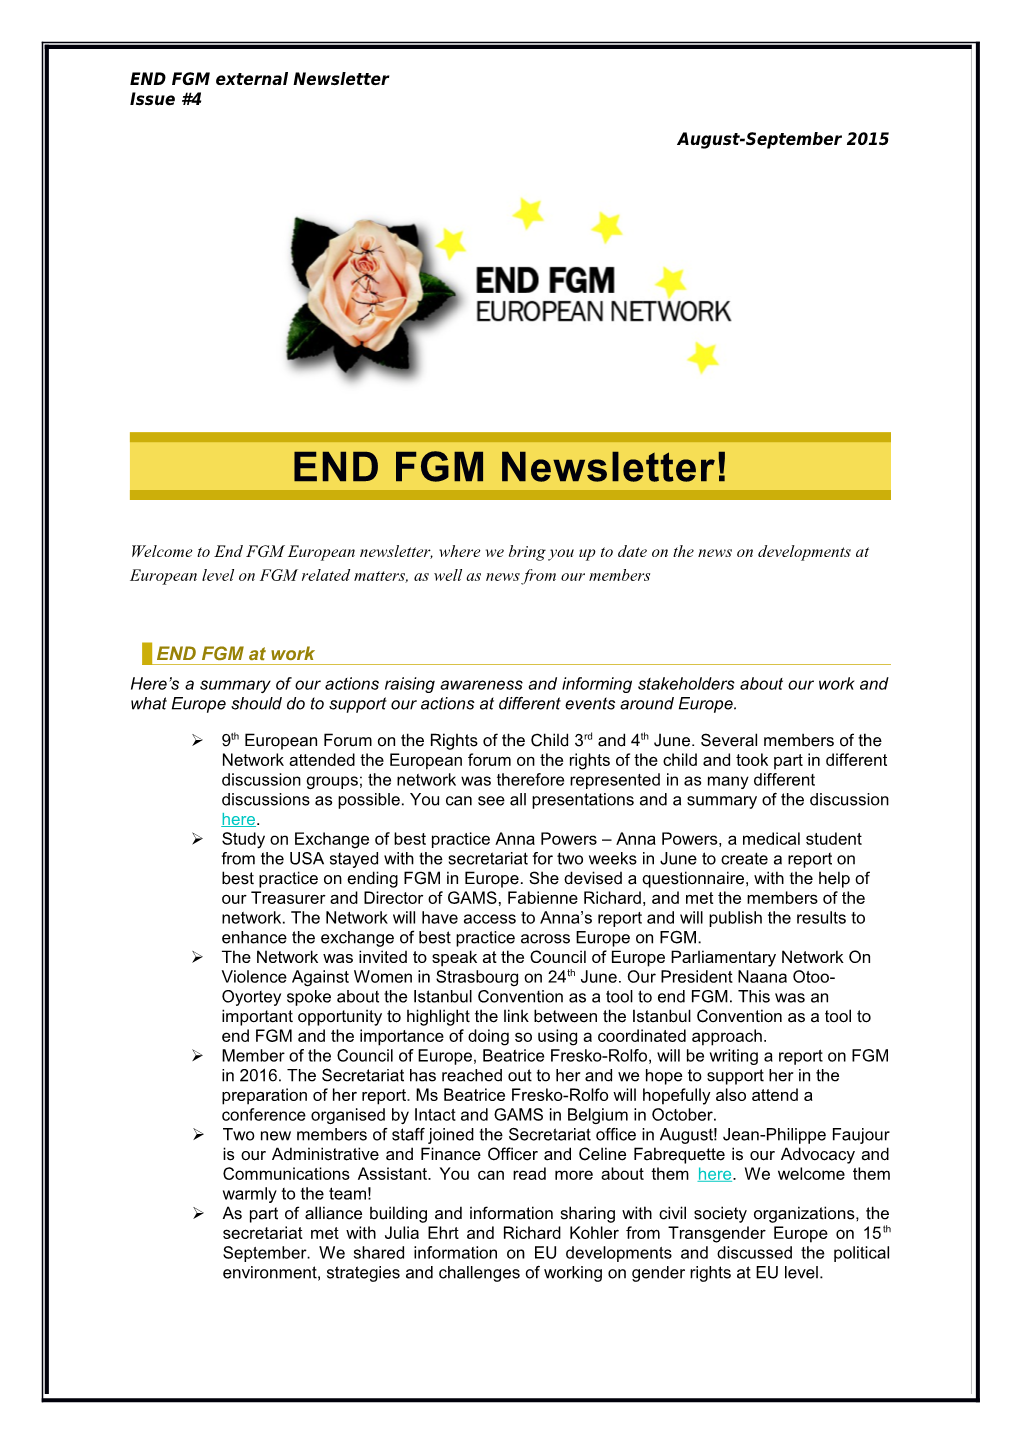 END FGM Internal Newsletter #1